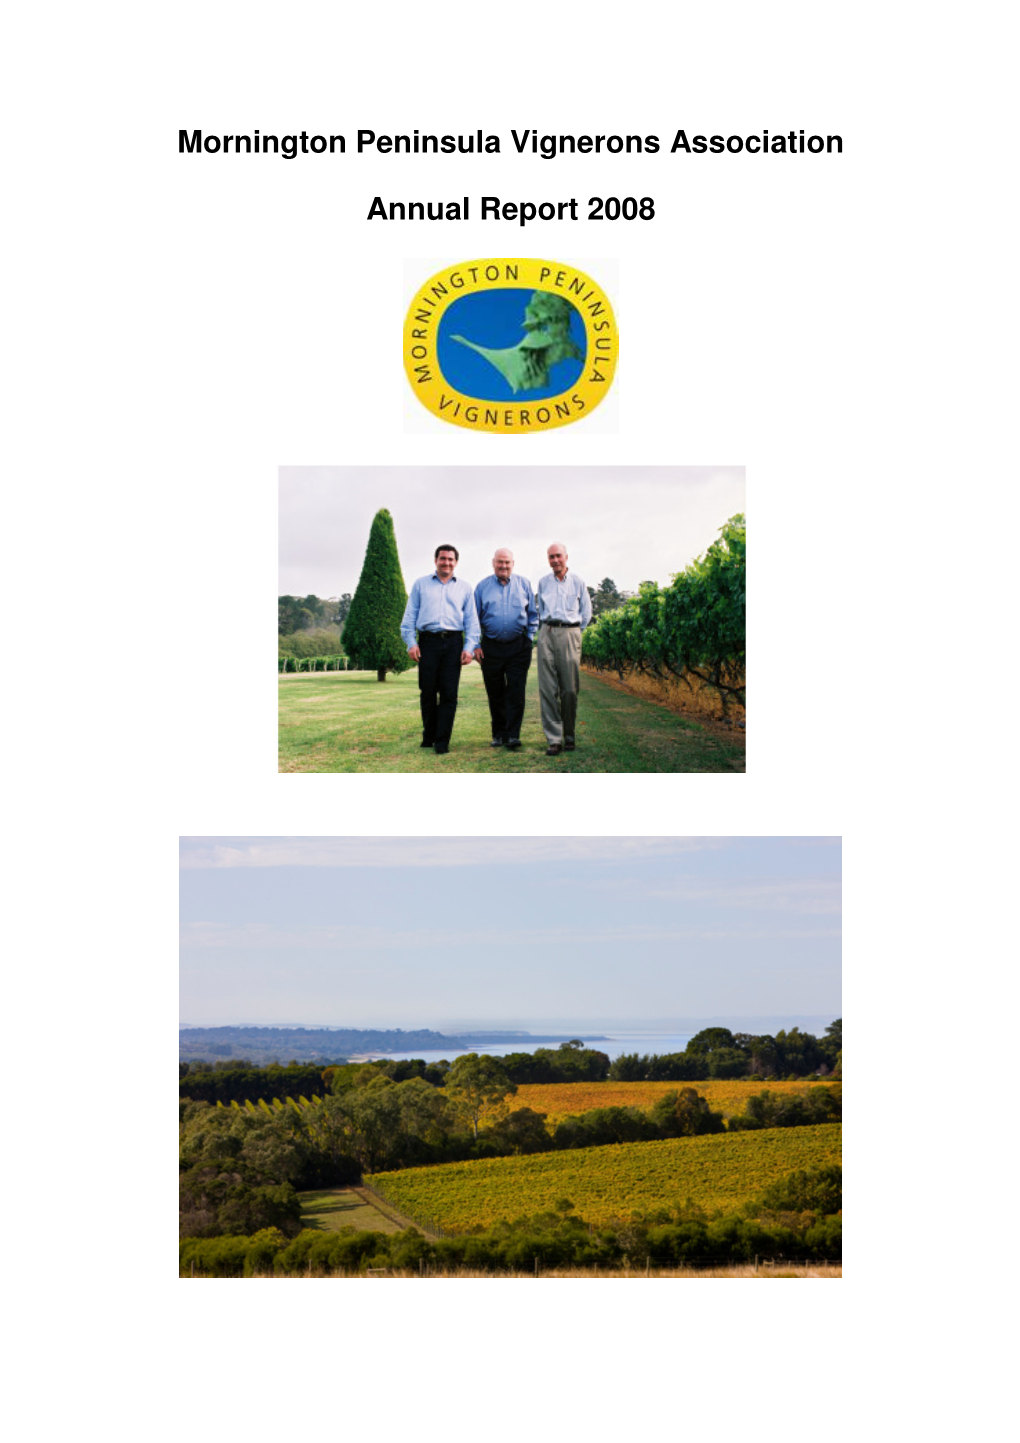 Mornington Peninsula Vignerons Association Annual Report 2008